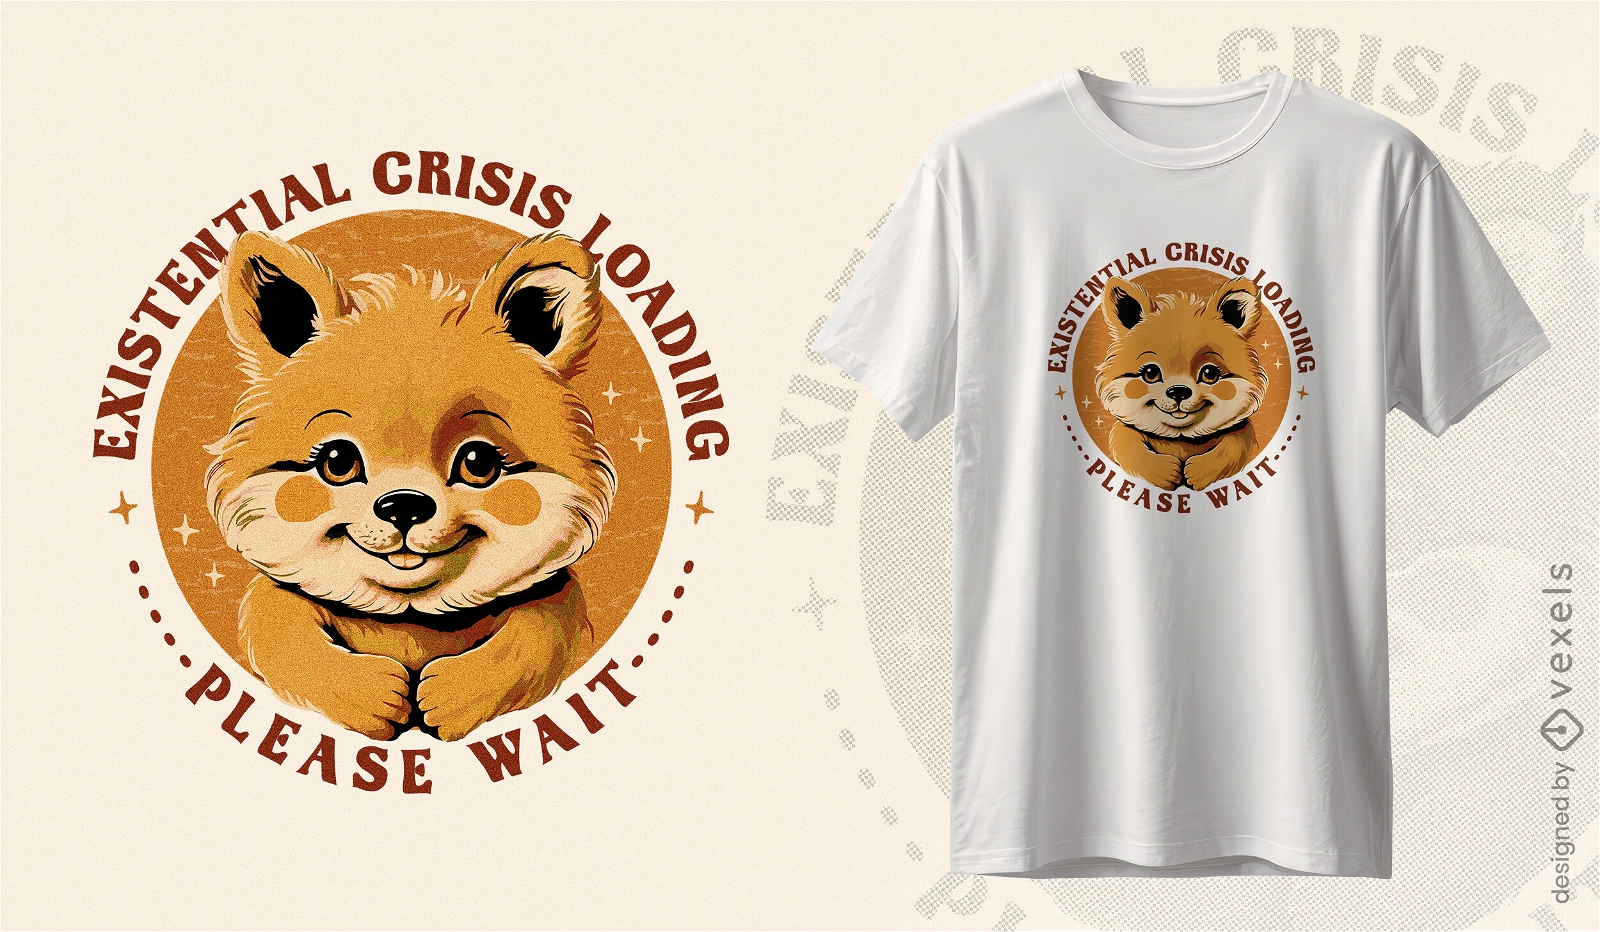 Red panda existential crisis t-shirt design